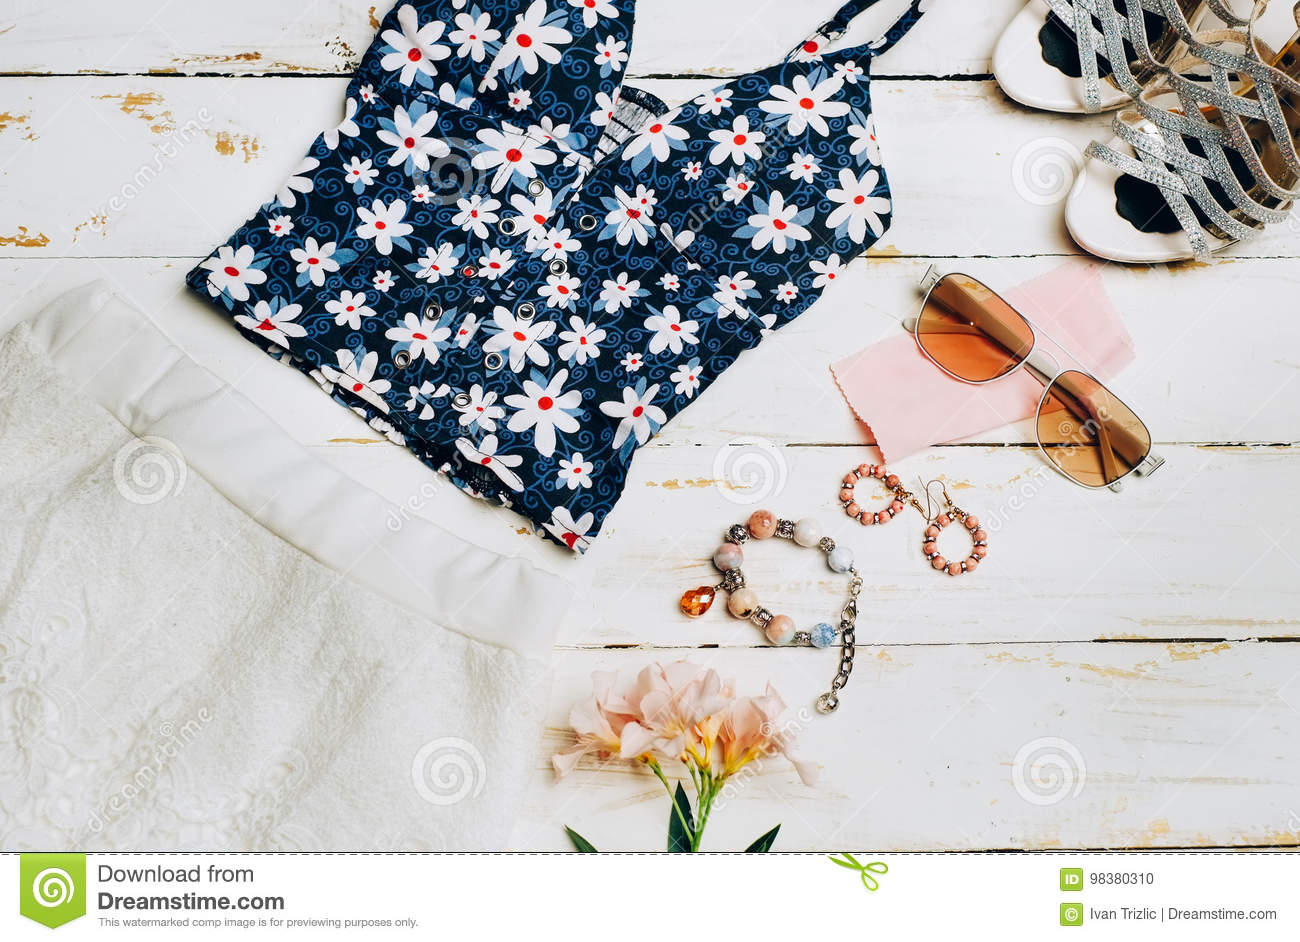 Floral Summer Fashion Accessories